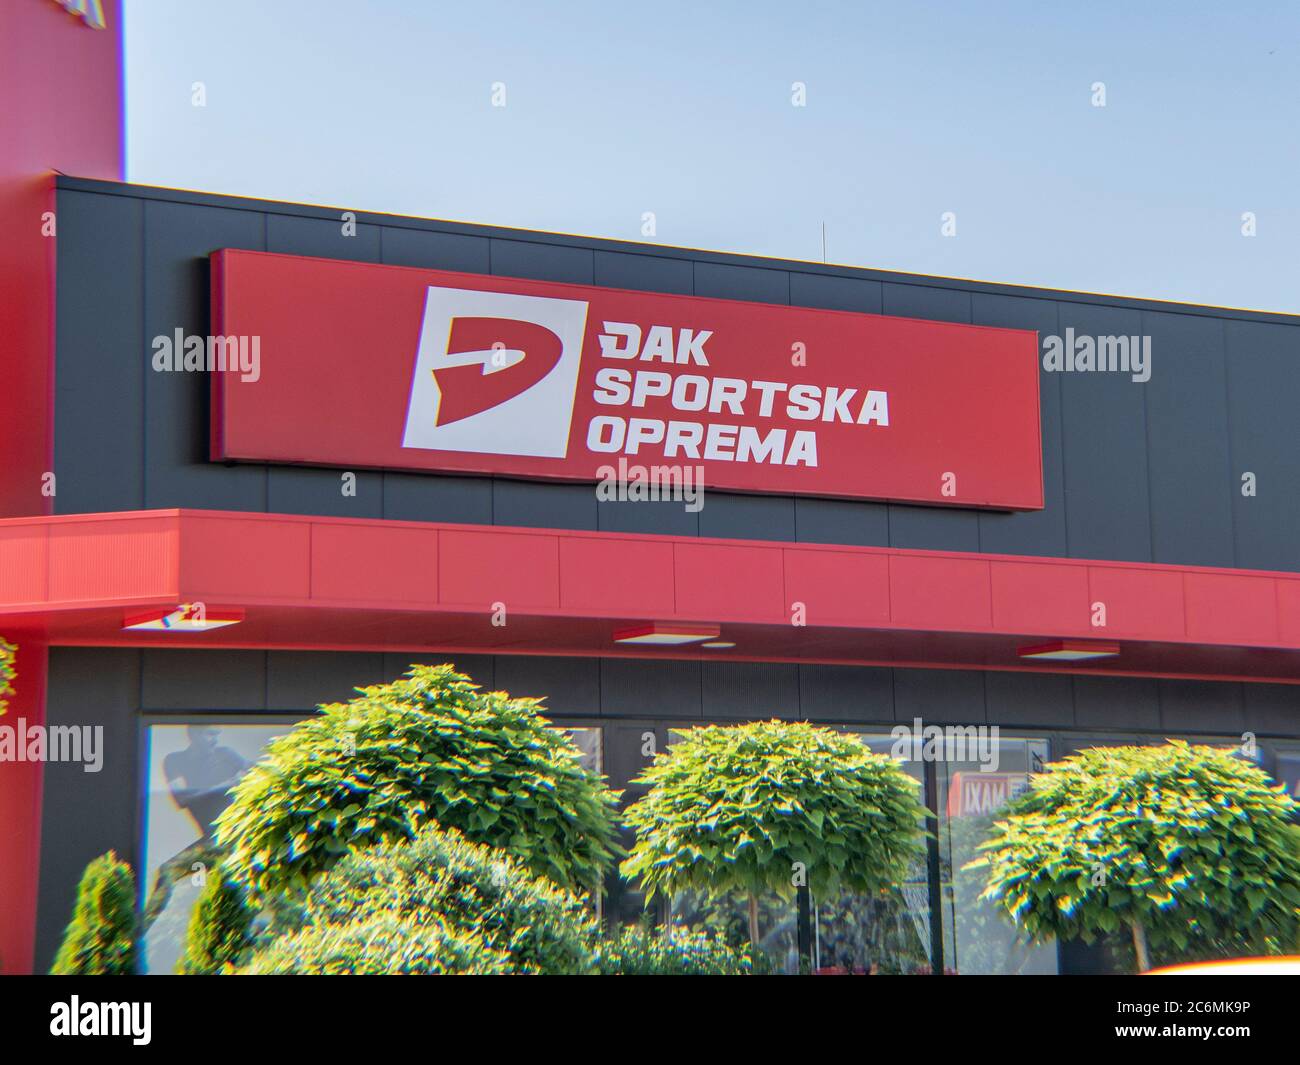 Djak sportska oprema store exterior in Vivo shopping park, Jagodina, Serbia  Stock Photo - Alamy